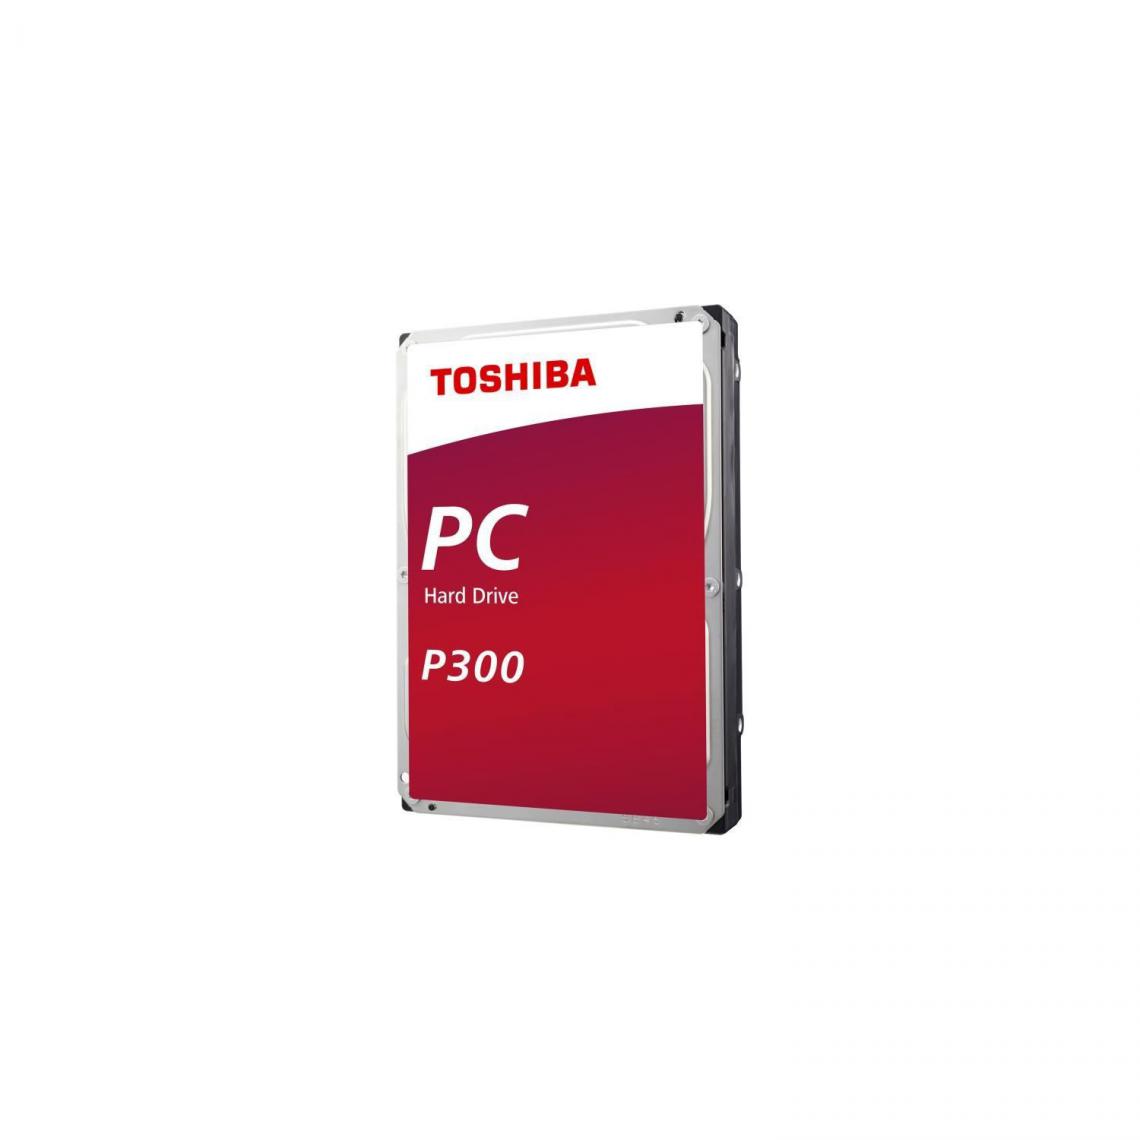 Toshiba - TOSHIBA P300 Desktop PC Hard Drive - Disque dur interne 4 To - Disque Dur interne